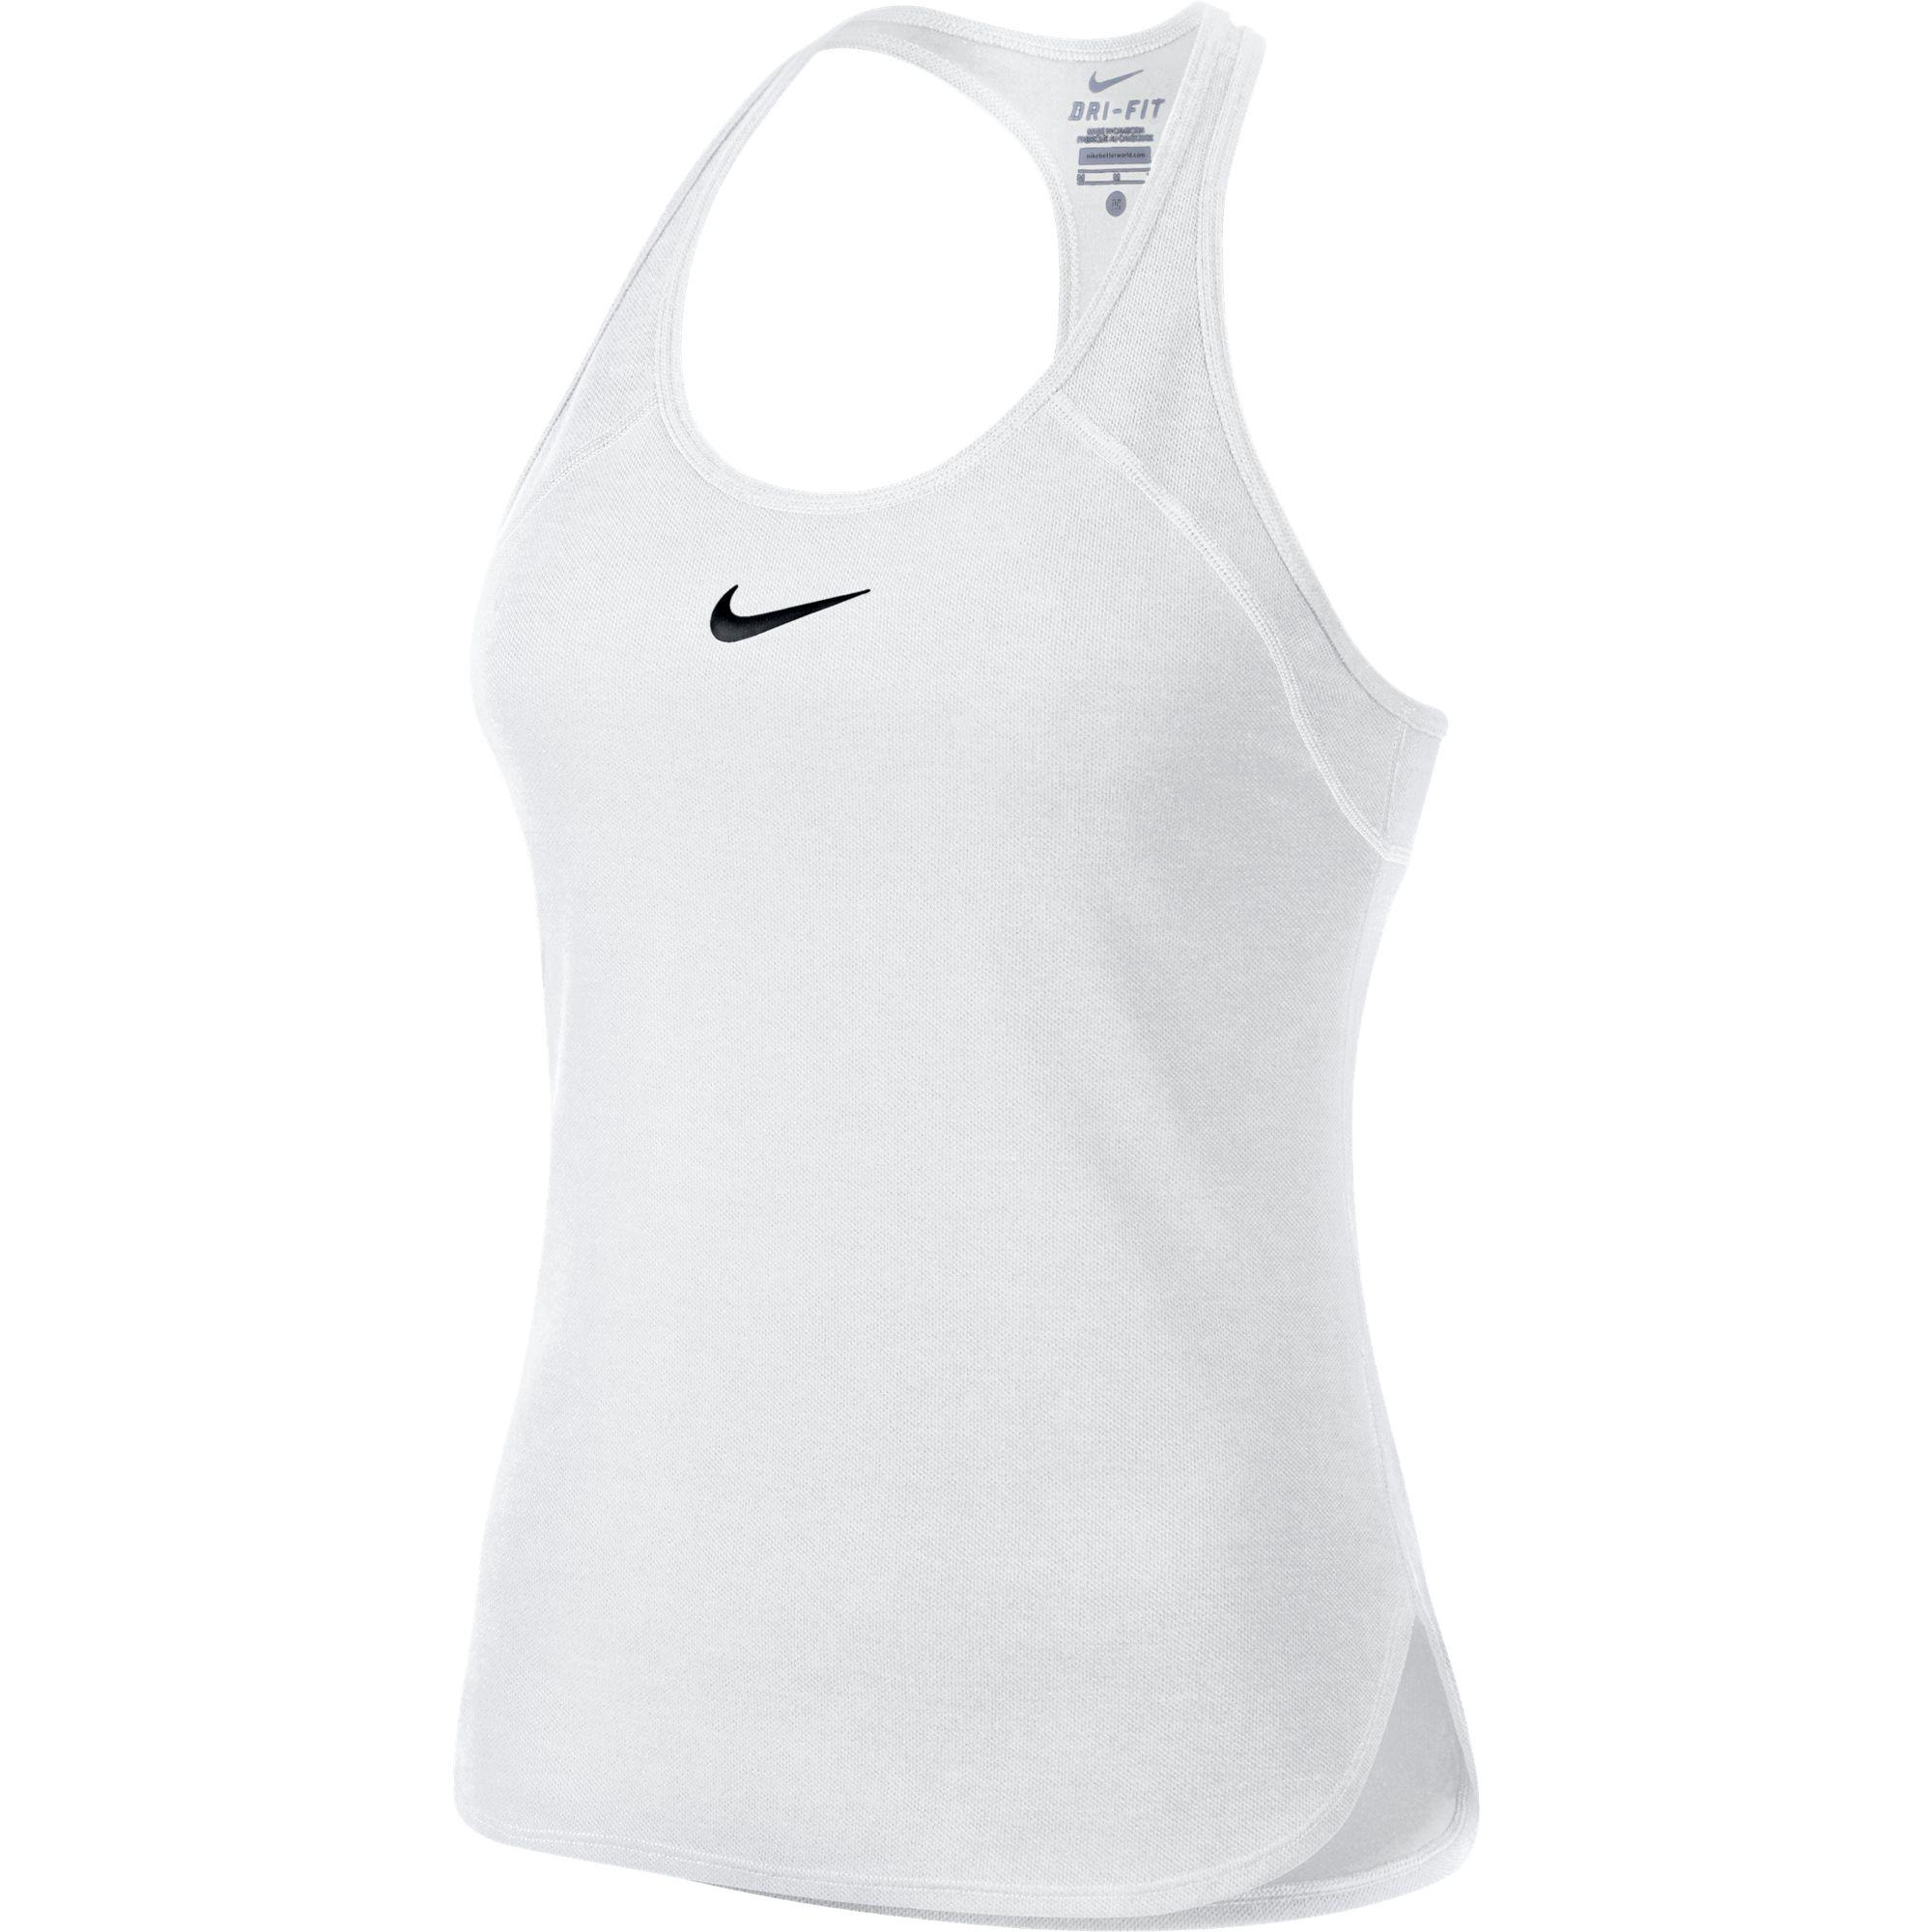 Nike Womens Dry Slam Tank Top White 